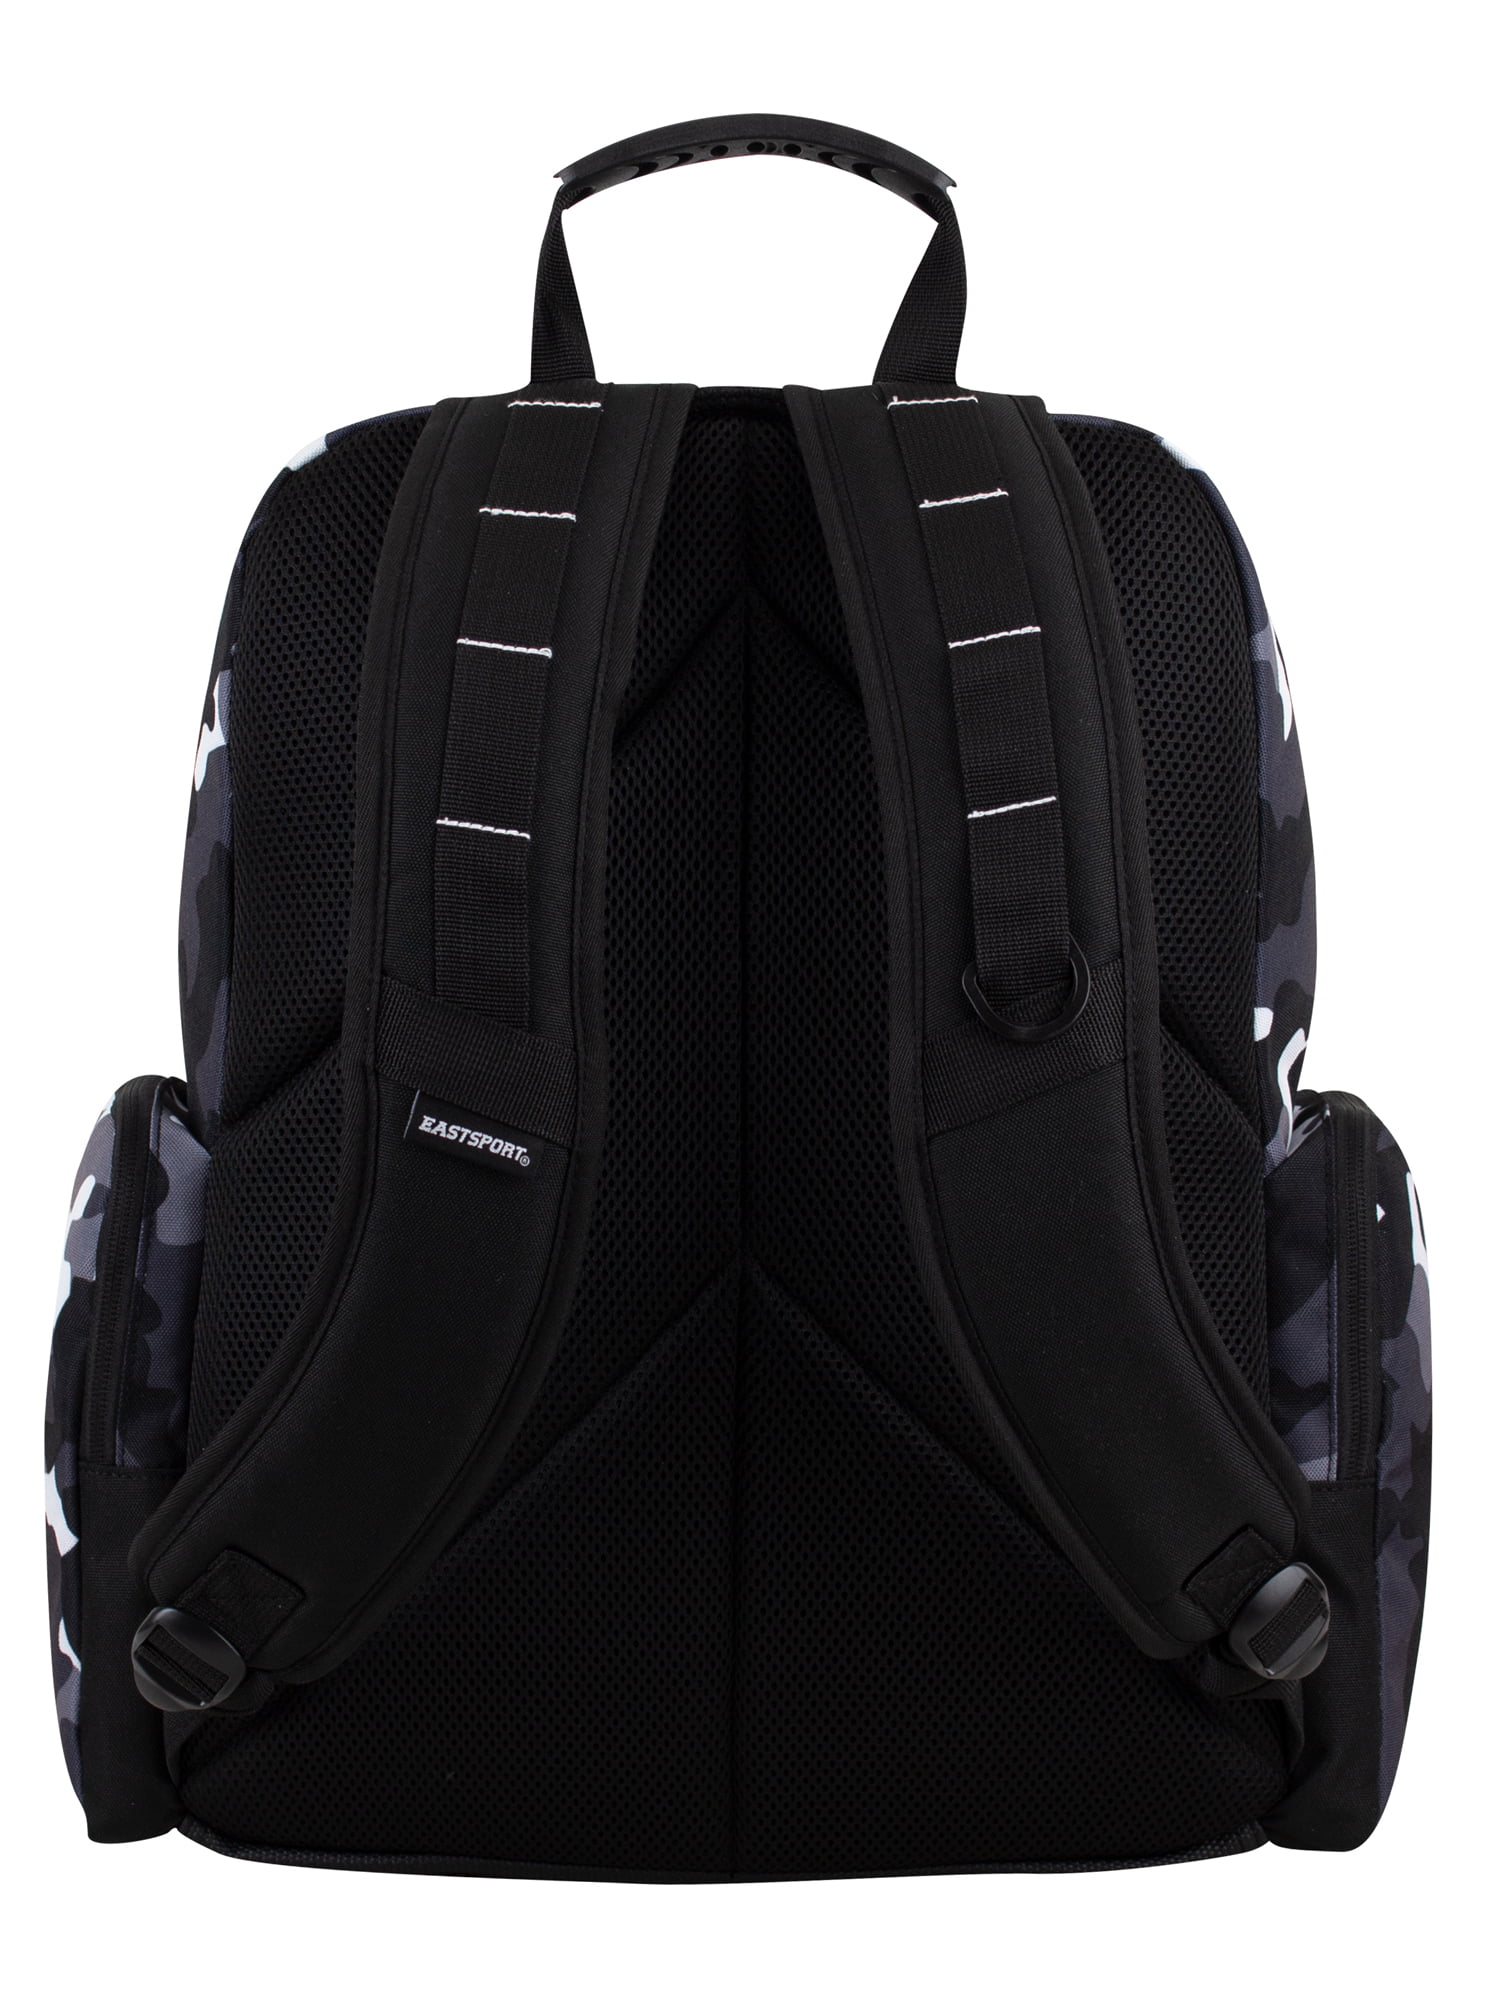 Unisex Expandable Velocity Backpack, Black - Walmart.com